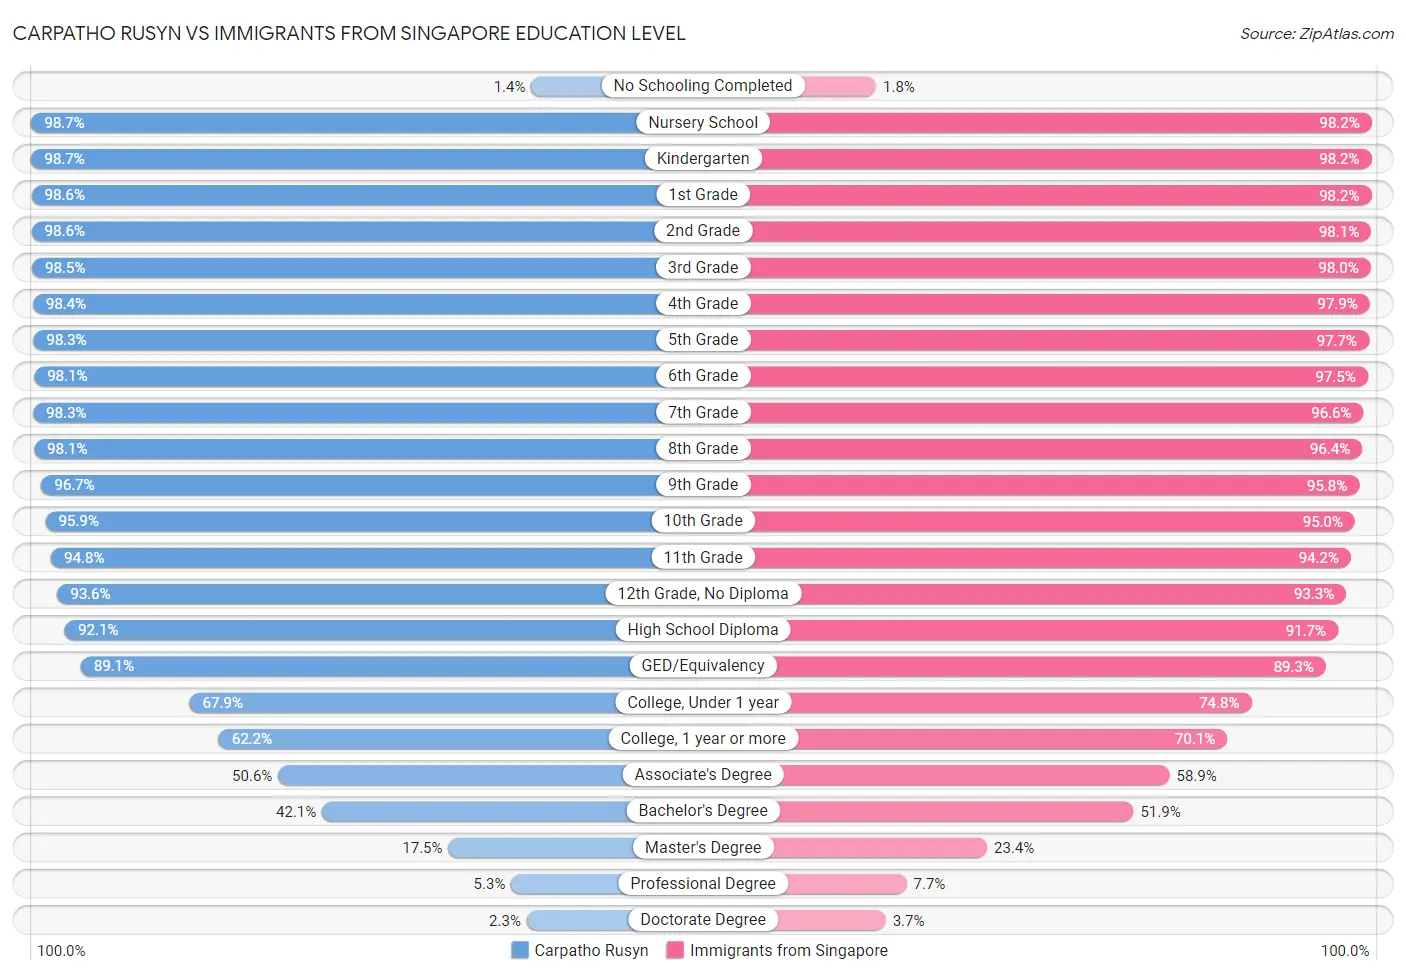 Carpatho Rusyn vs Immigrants from Singapore Education Level